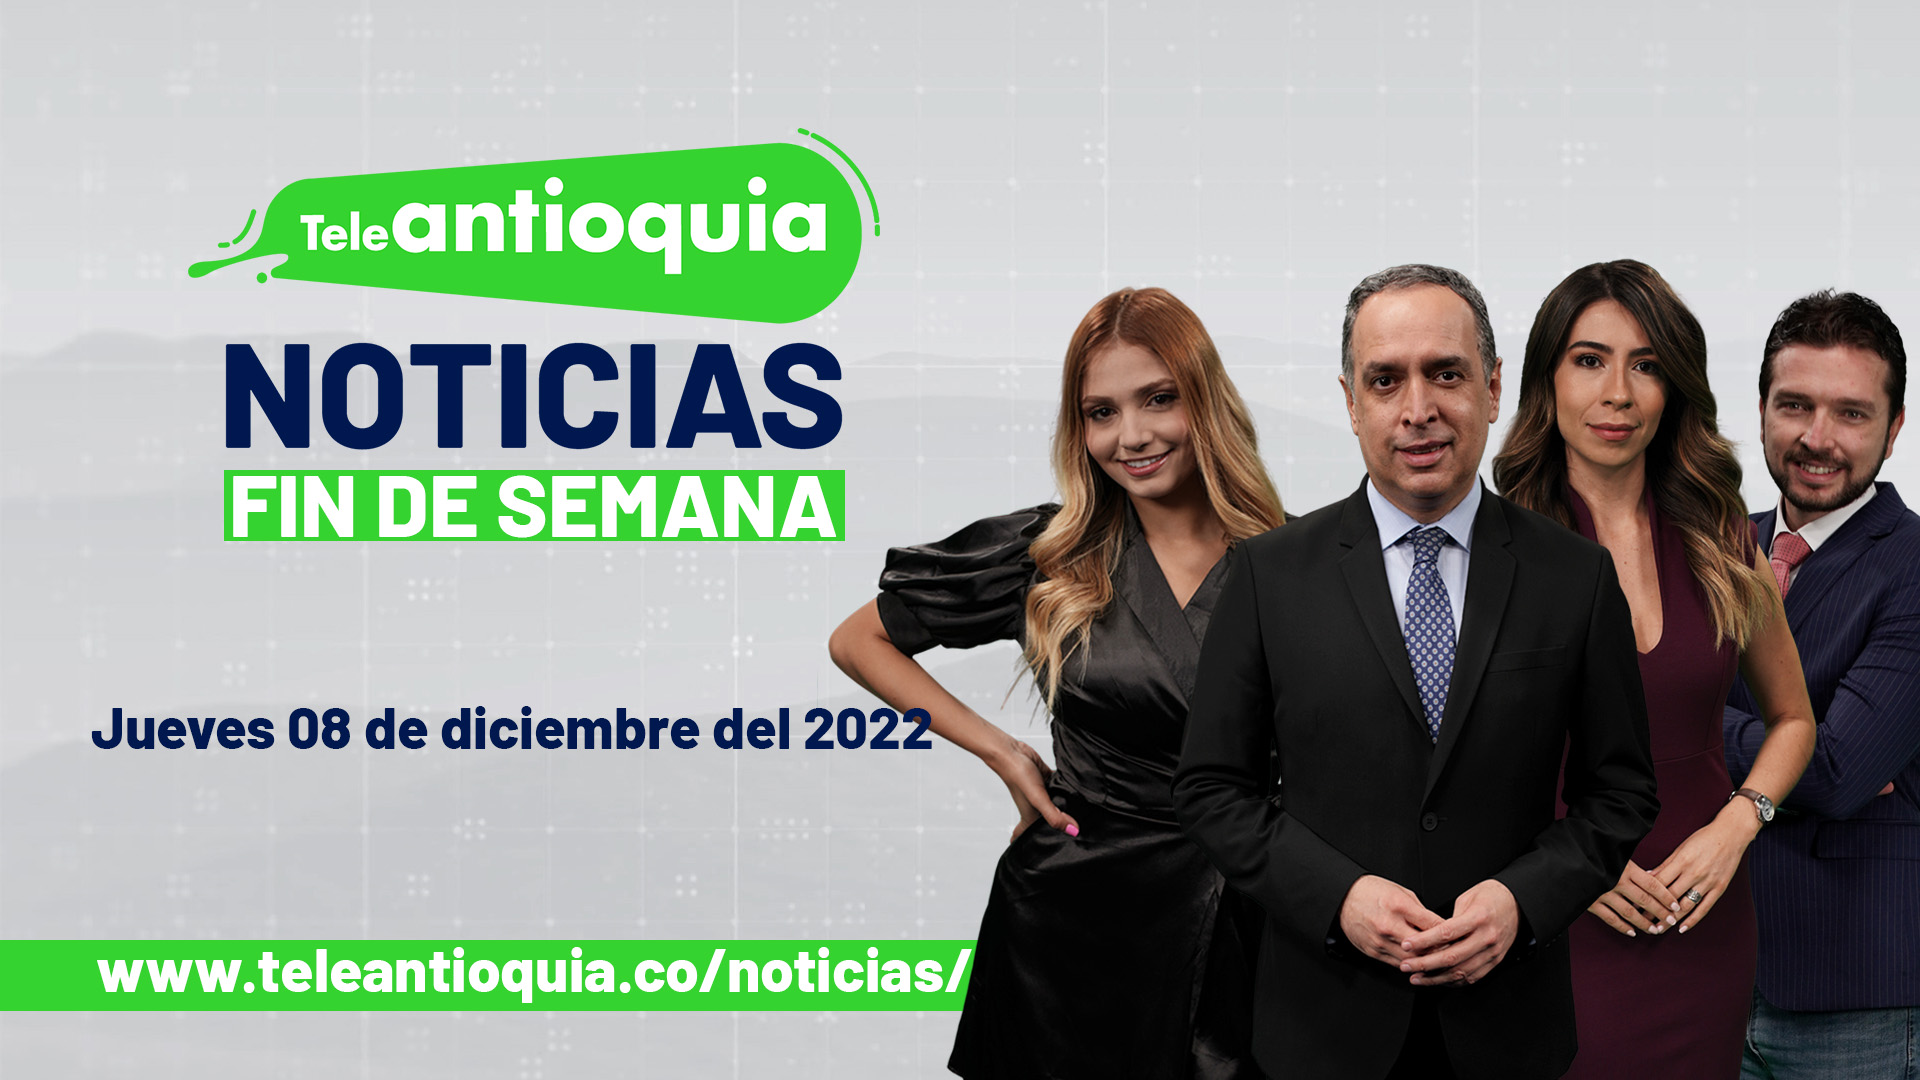 Teleantioquia Noticias- Fin de semana, jueves 08 de diciembre del 2022